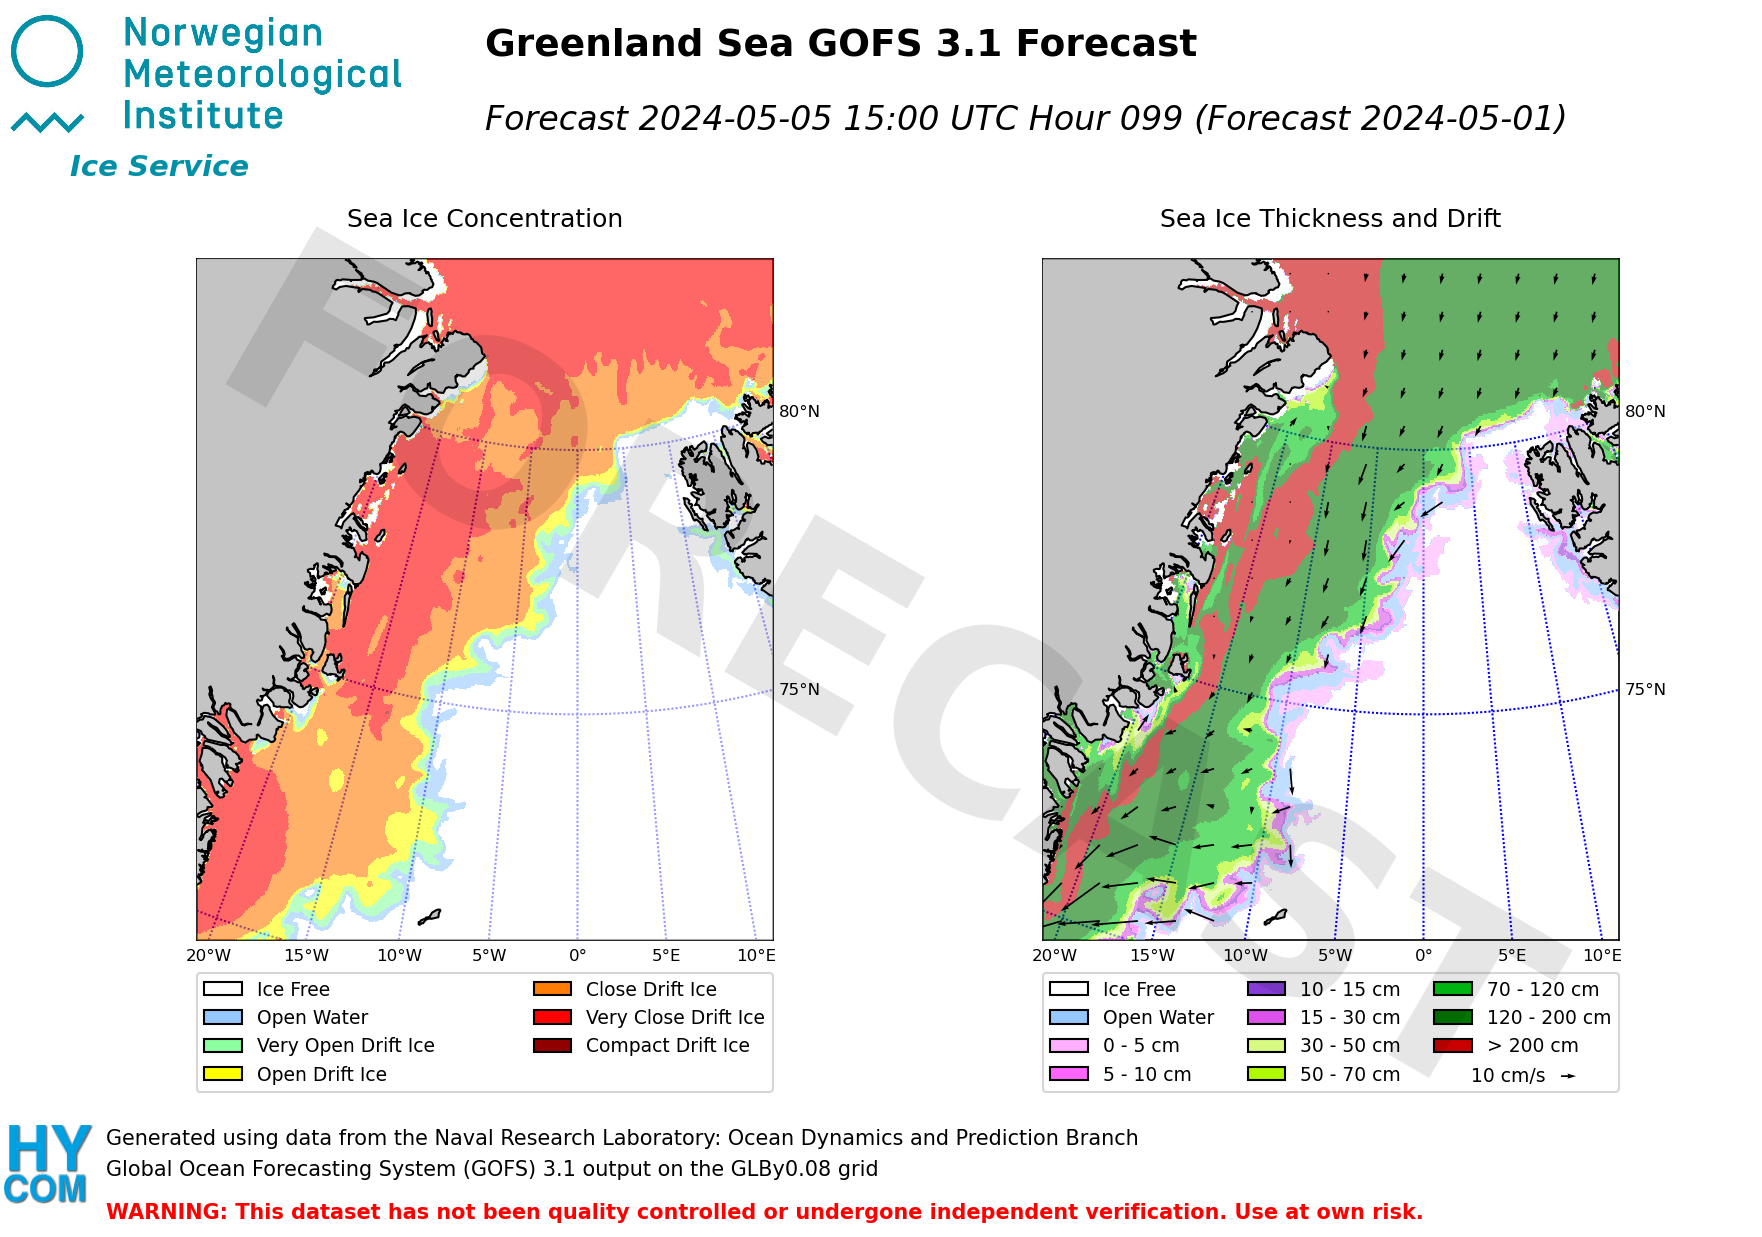 Latest GOF3.1 3-day forecast